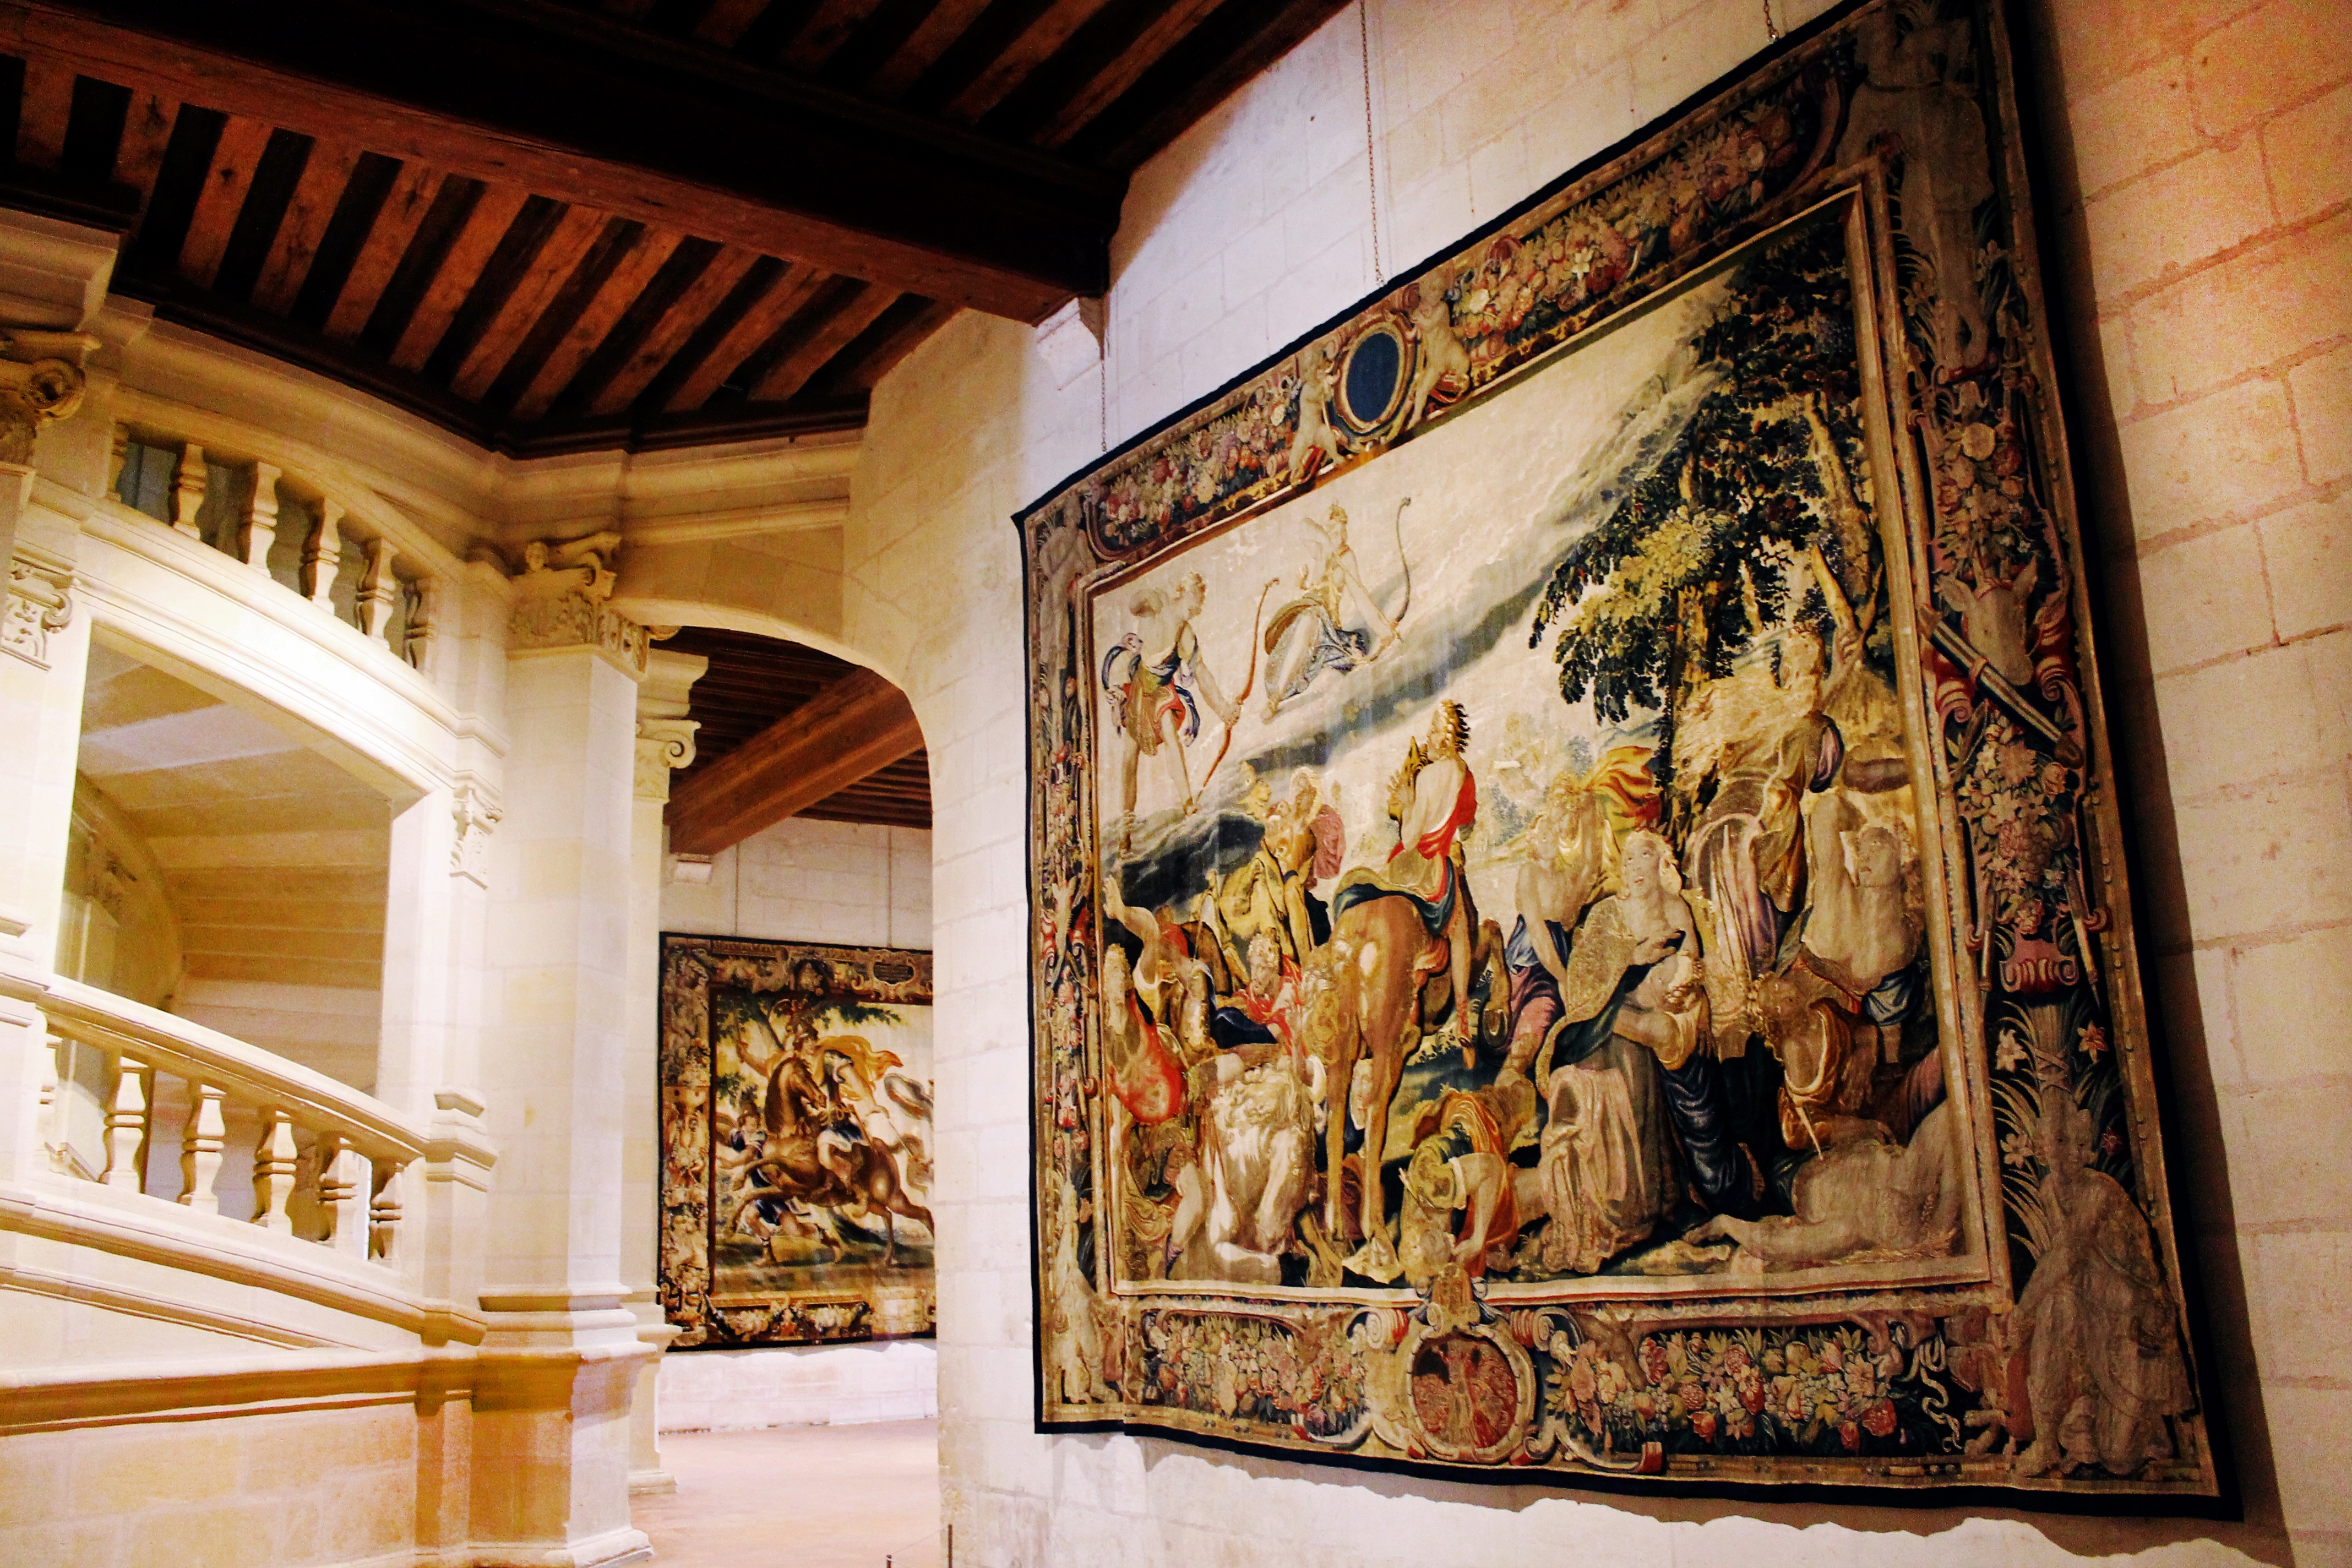 Visita ao Château de Chambord, Vale do Loire